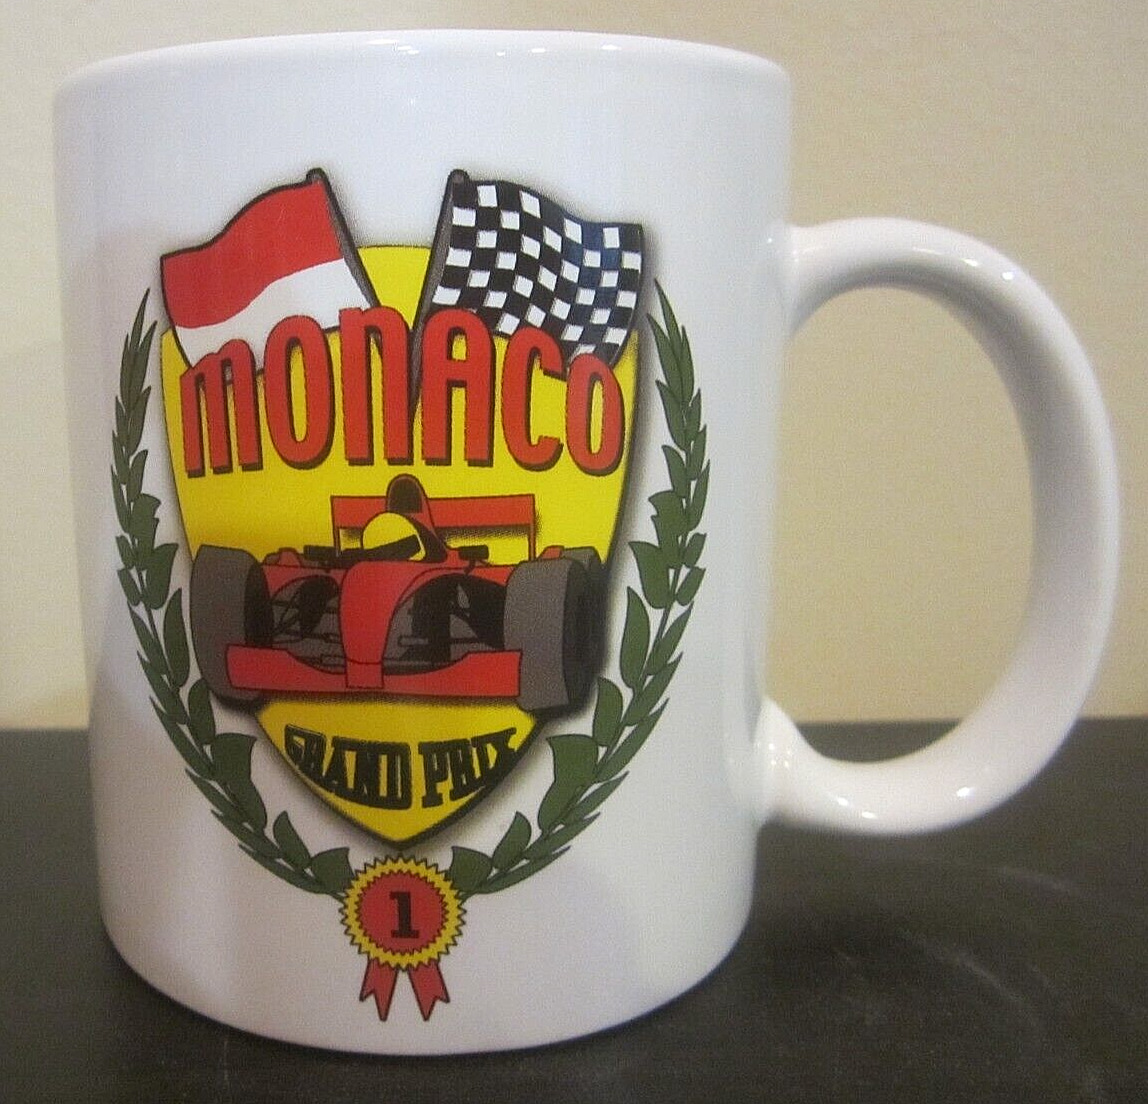 Monaco Grand Prix Commemorative Ceramic Coffee Mug, One Sided Image